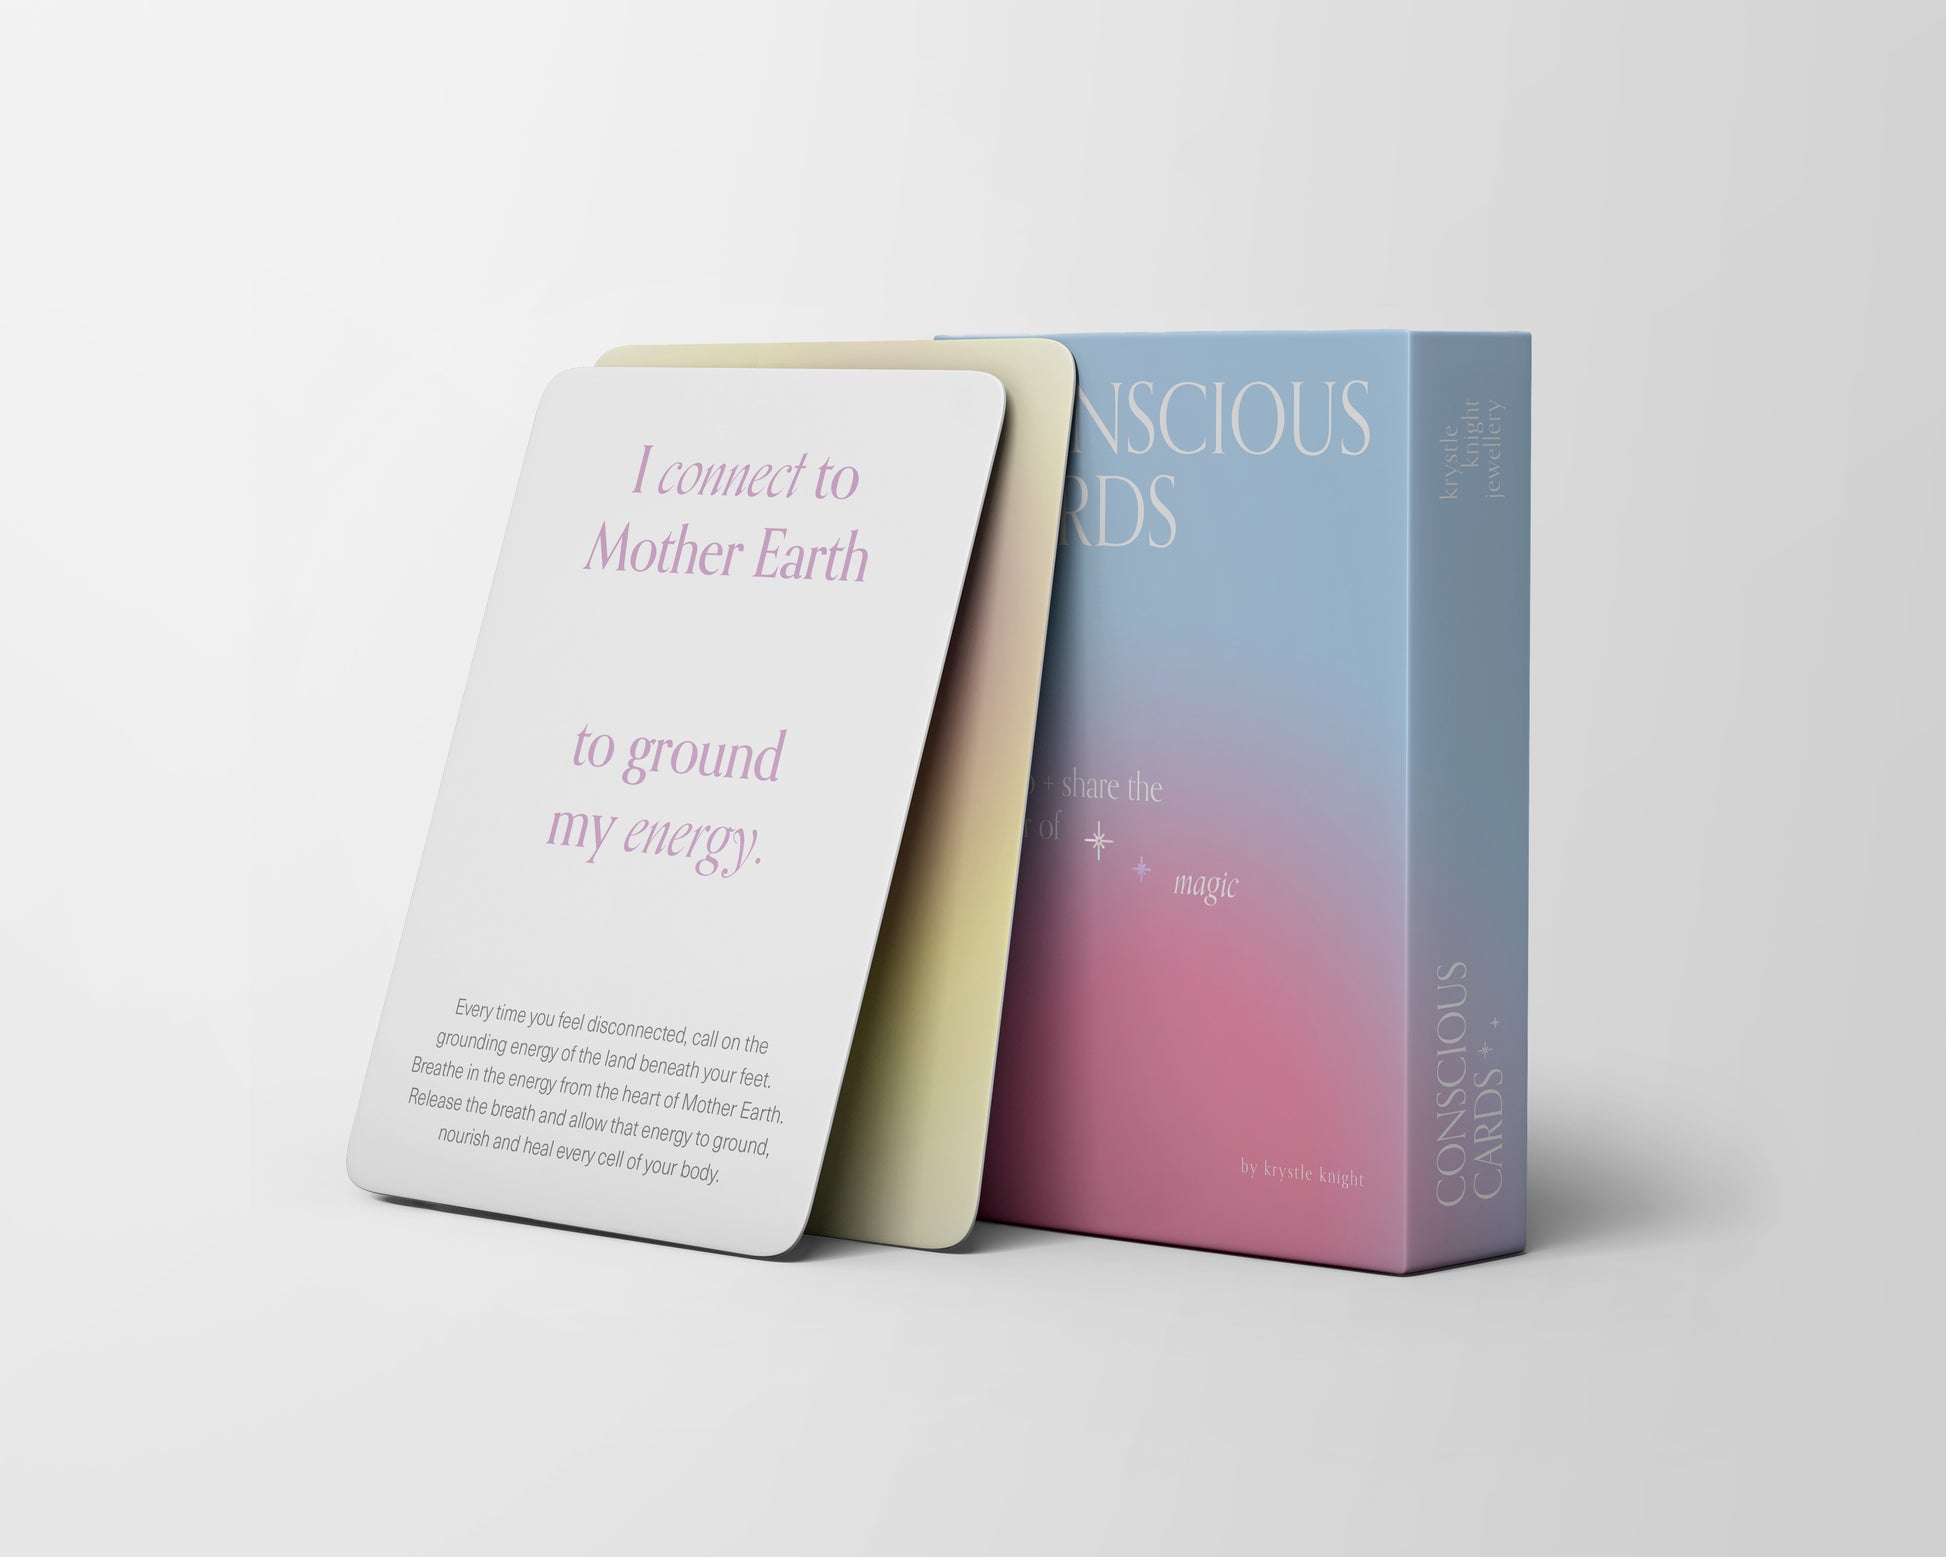 Conscious Cards - Roma Gift & Gourmet